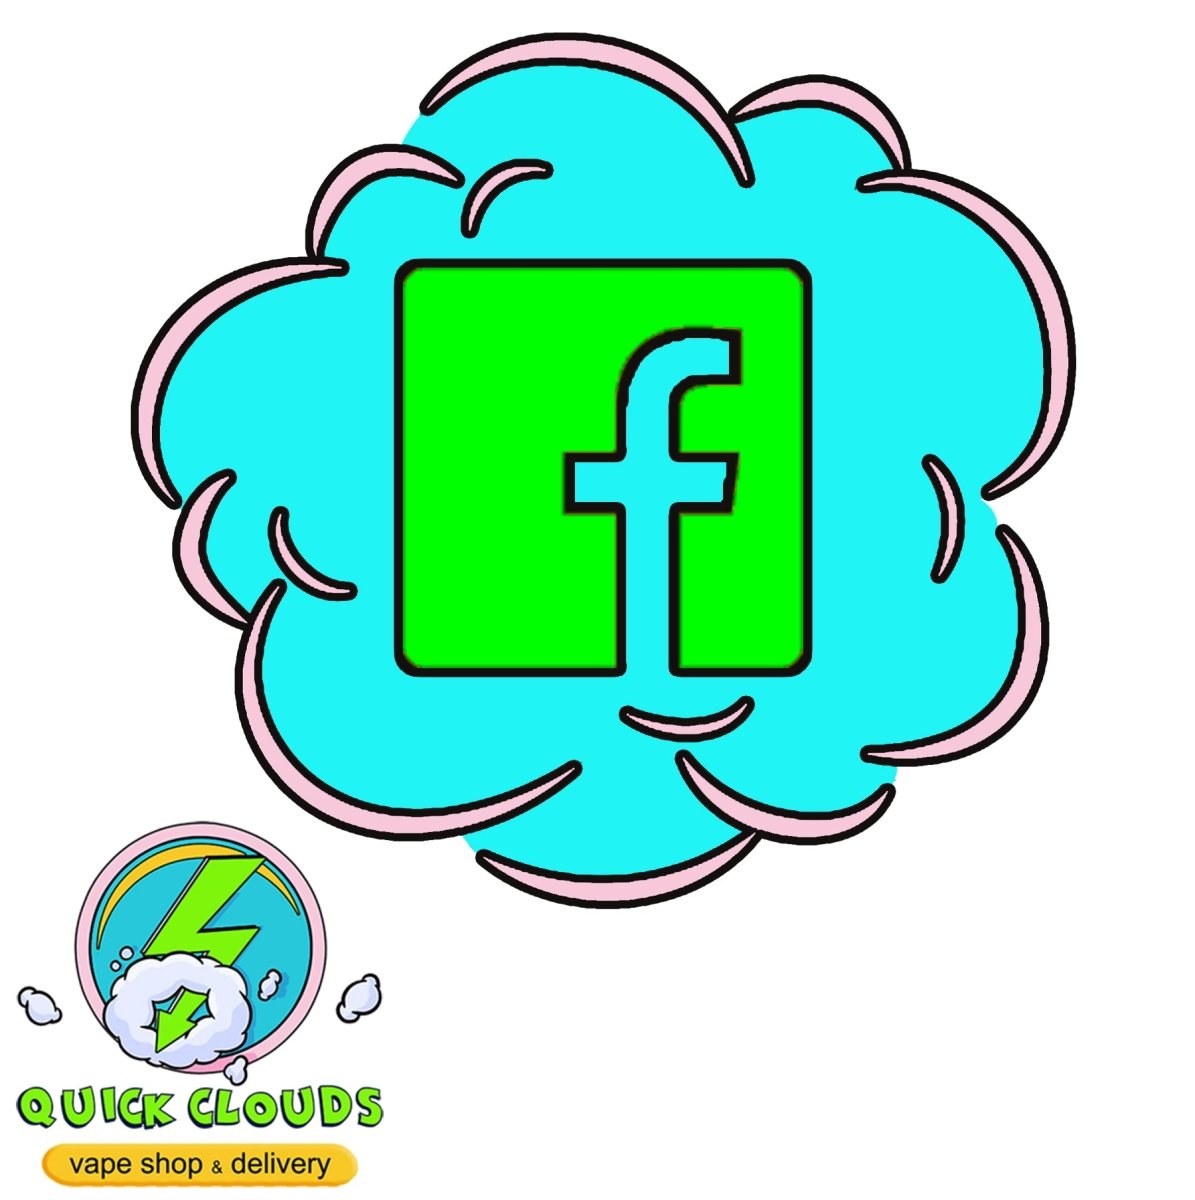 Vape Shop near me: Quick Clouds Social Media pages | Quick Clouds Vape Shop and Delivery